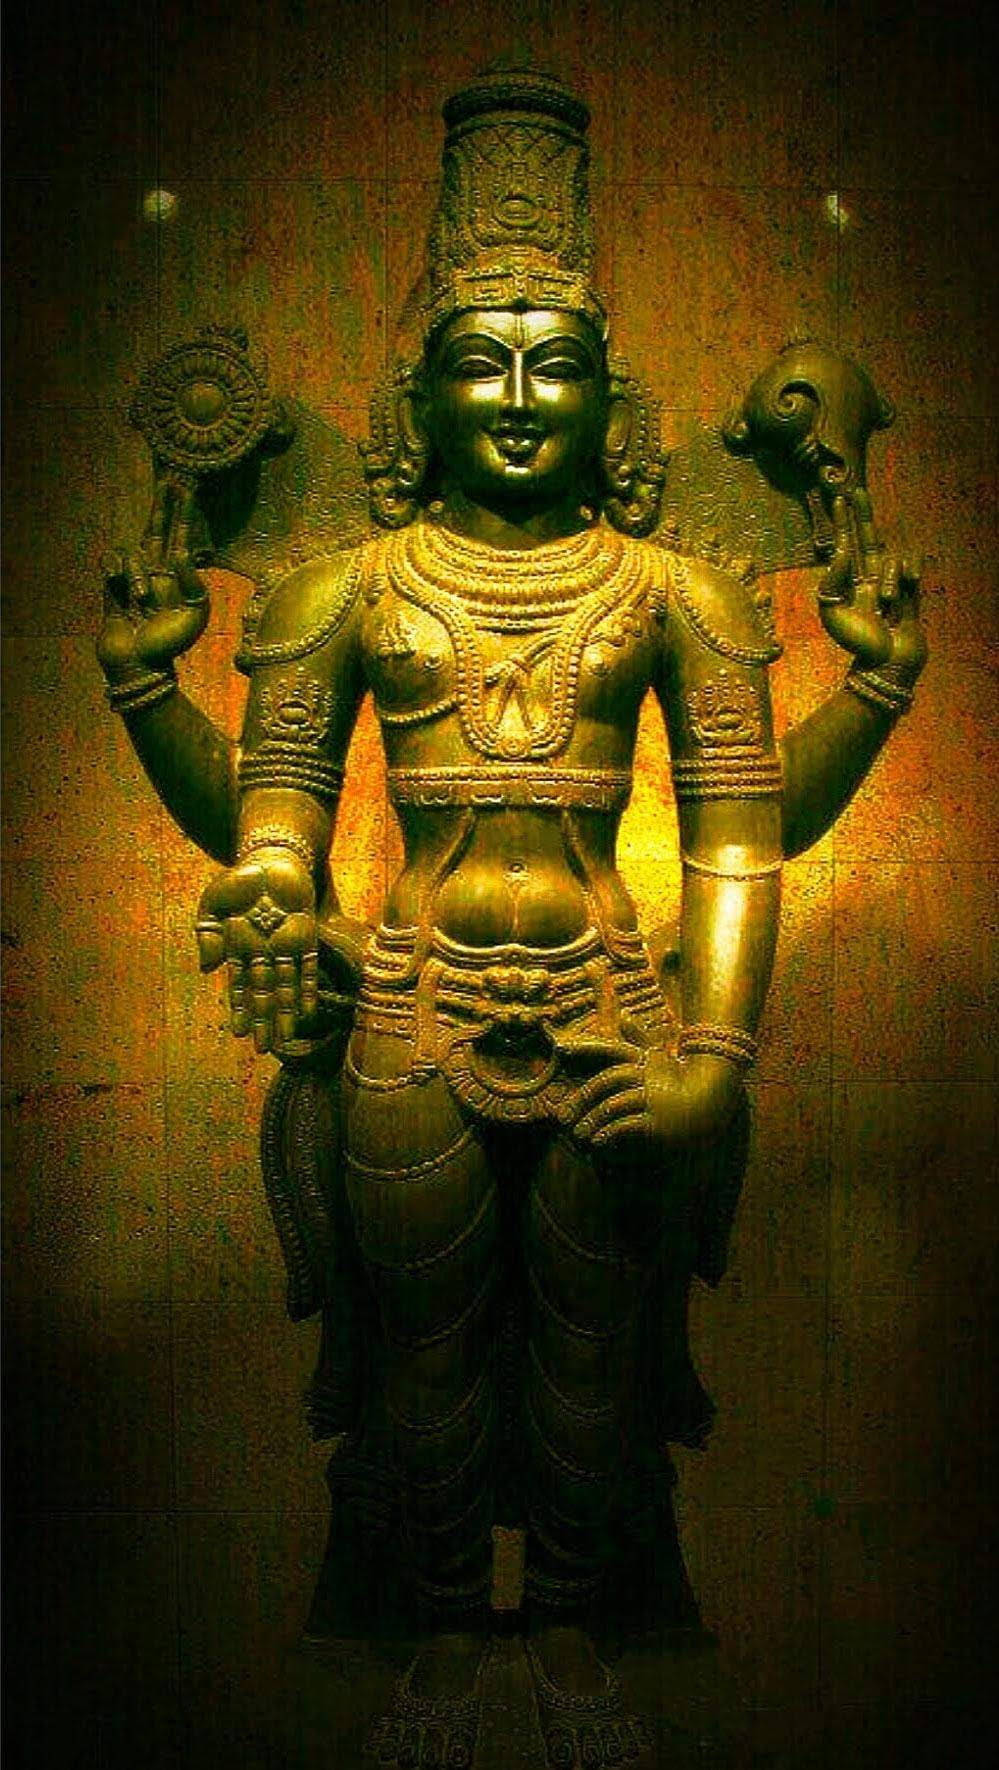 Caption: Majestic Stone Statue Of Venkateswara Swamy